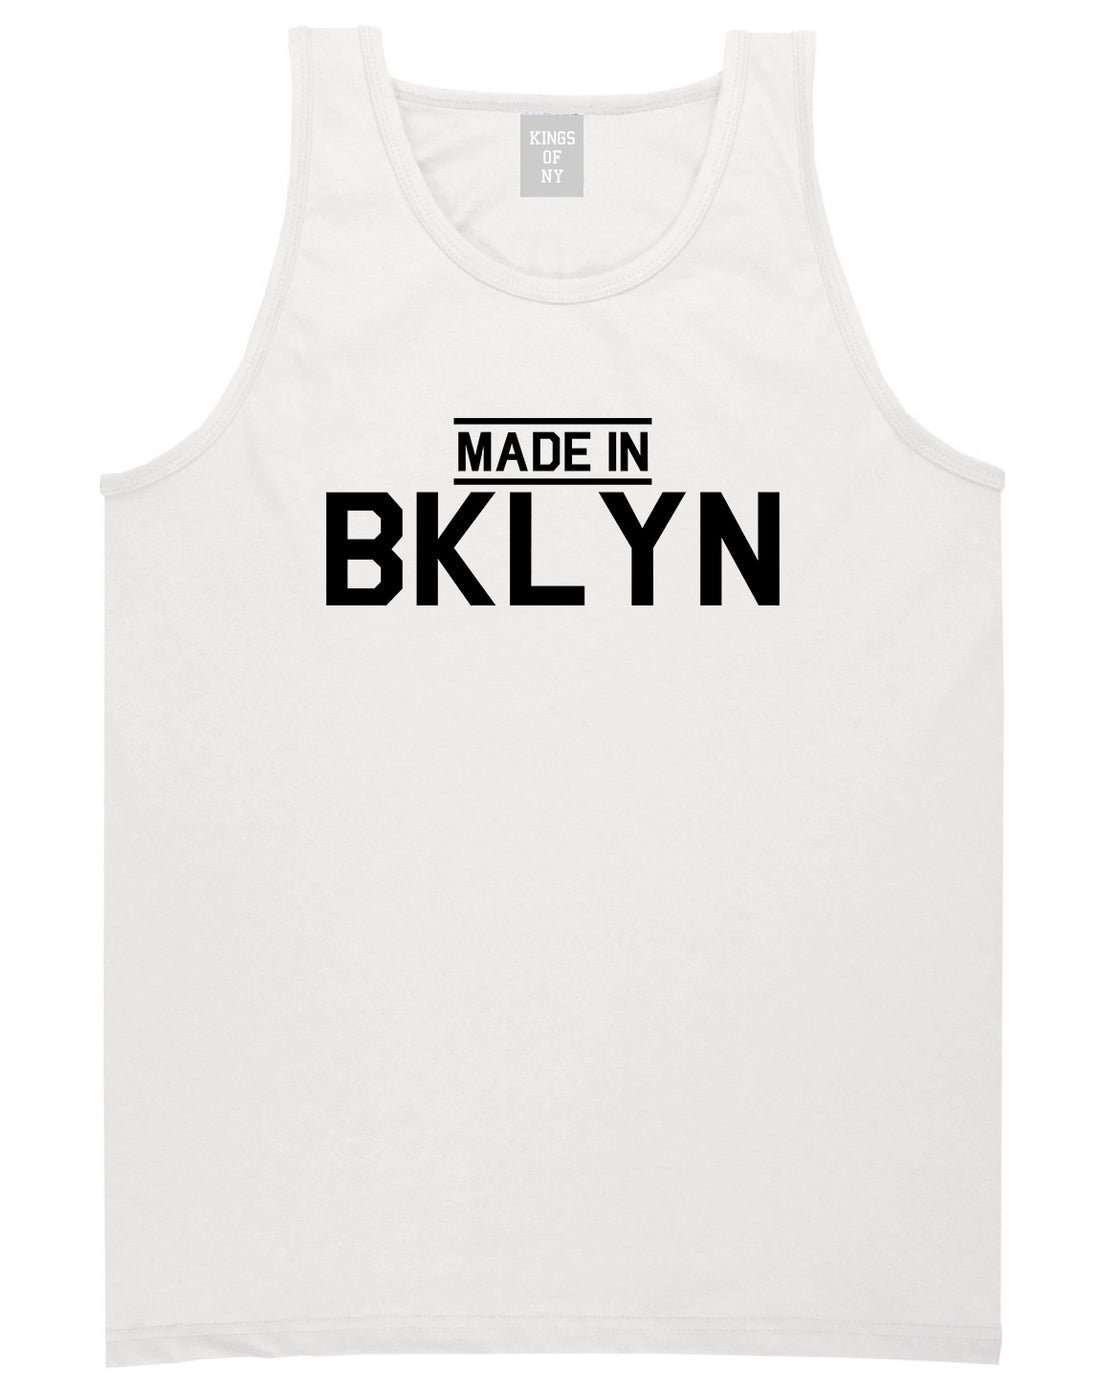 Made In BKLYN Brooklyn Mens Tank Top T-Shirt White